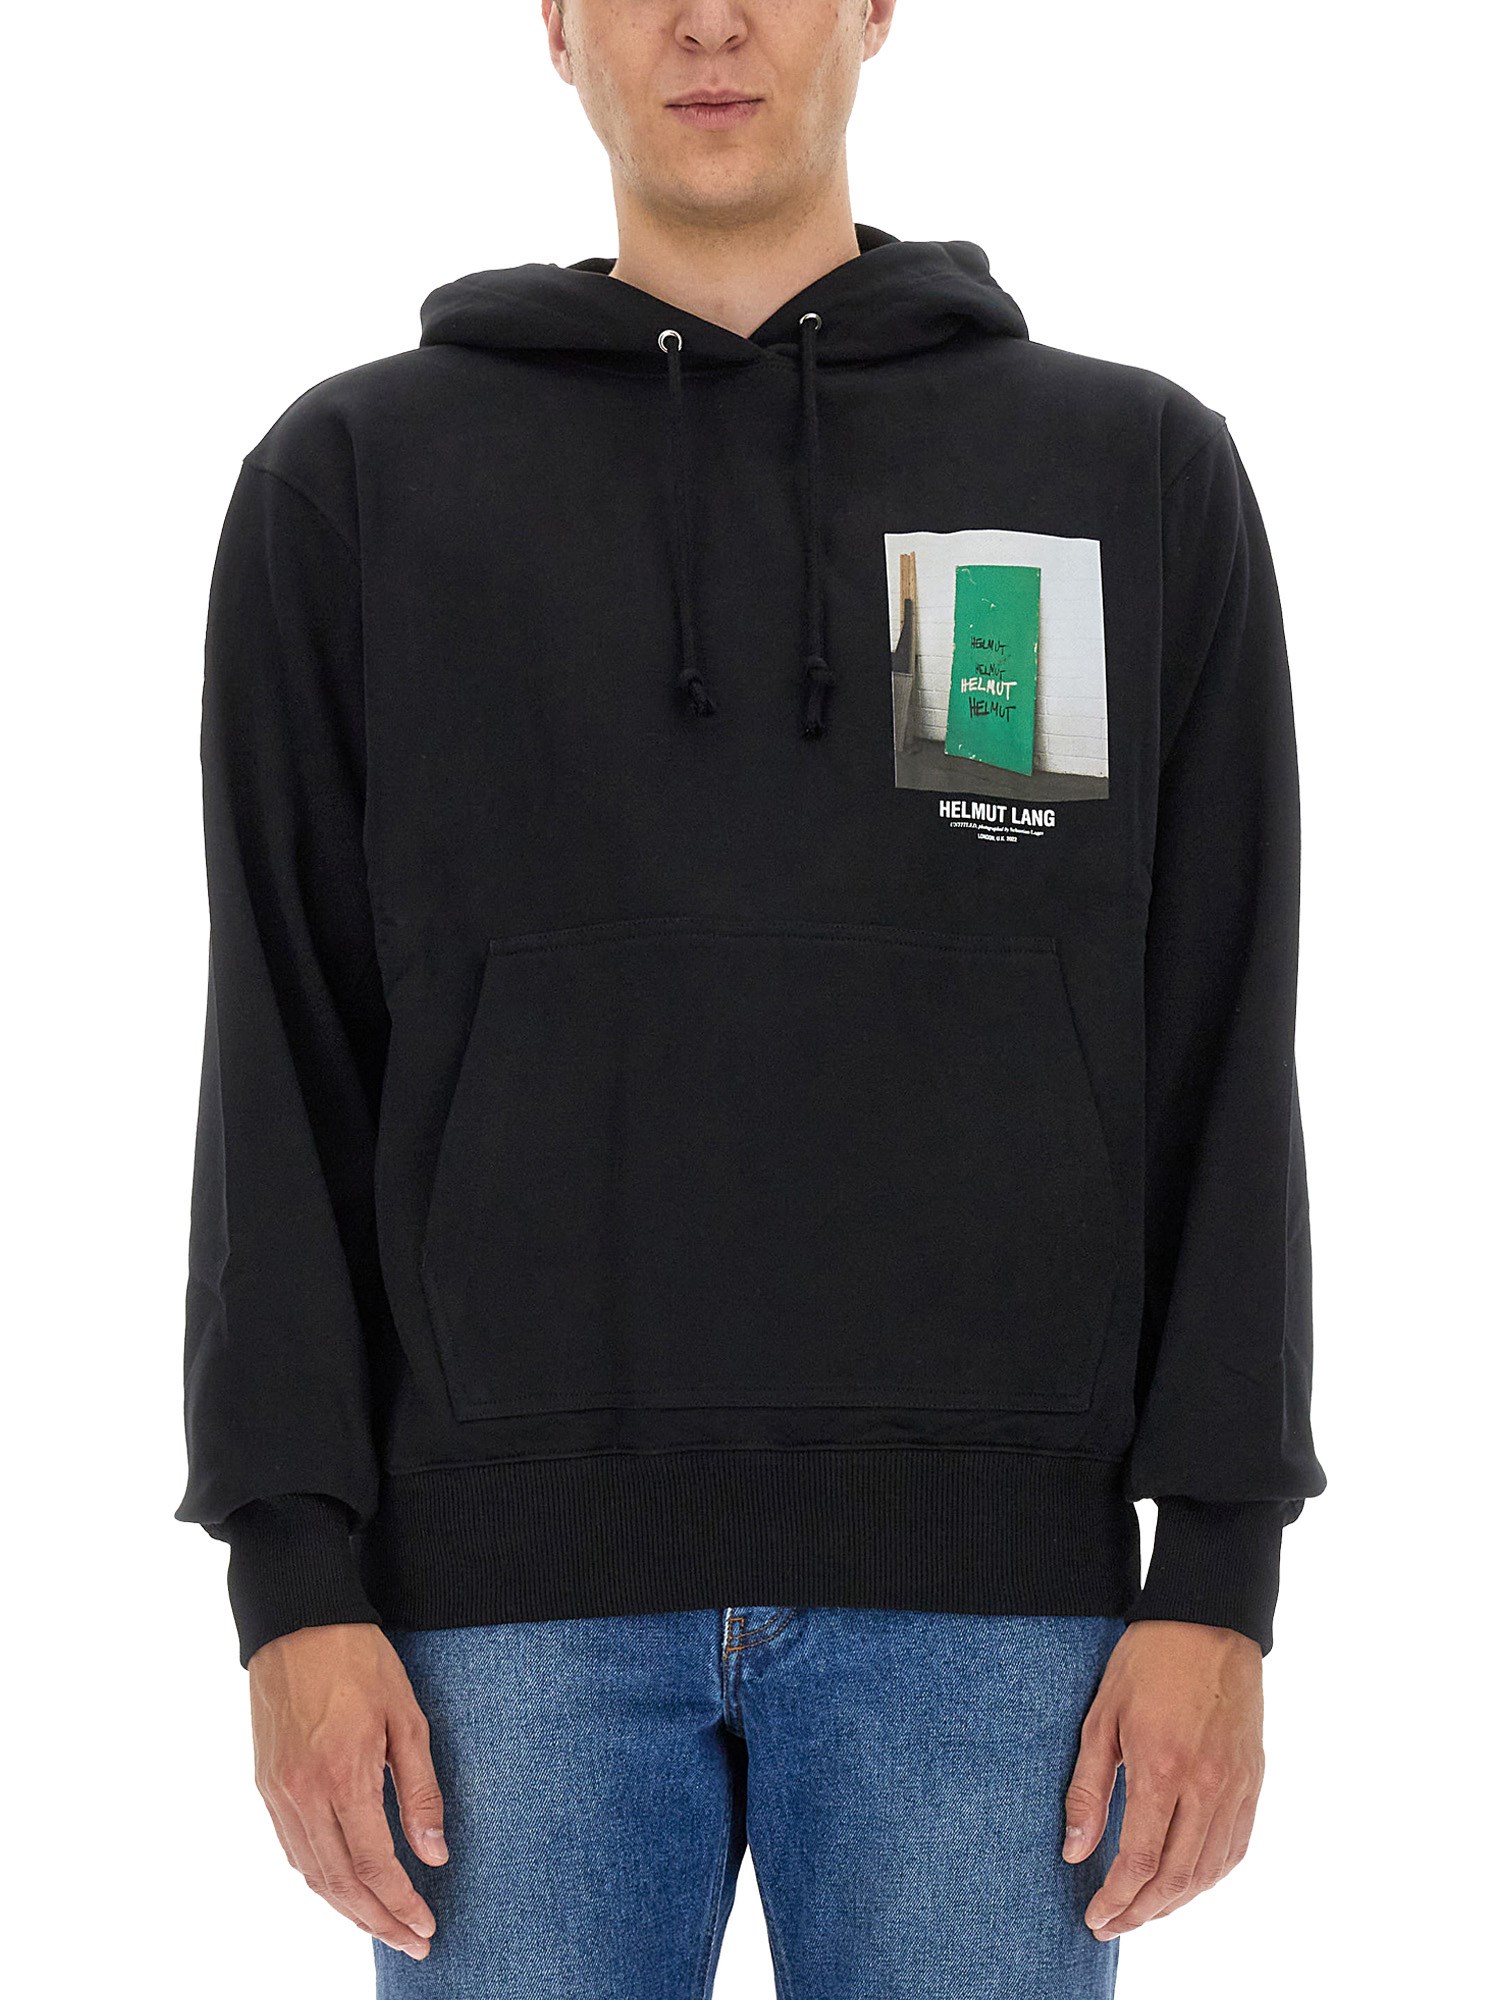 helmut lang sweatshirt with logo print